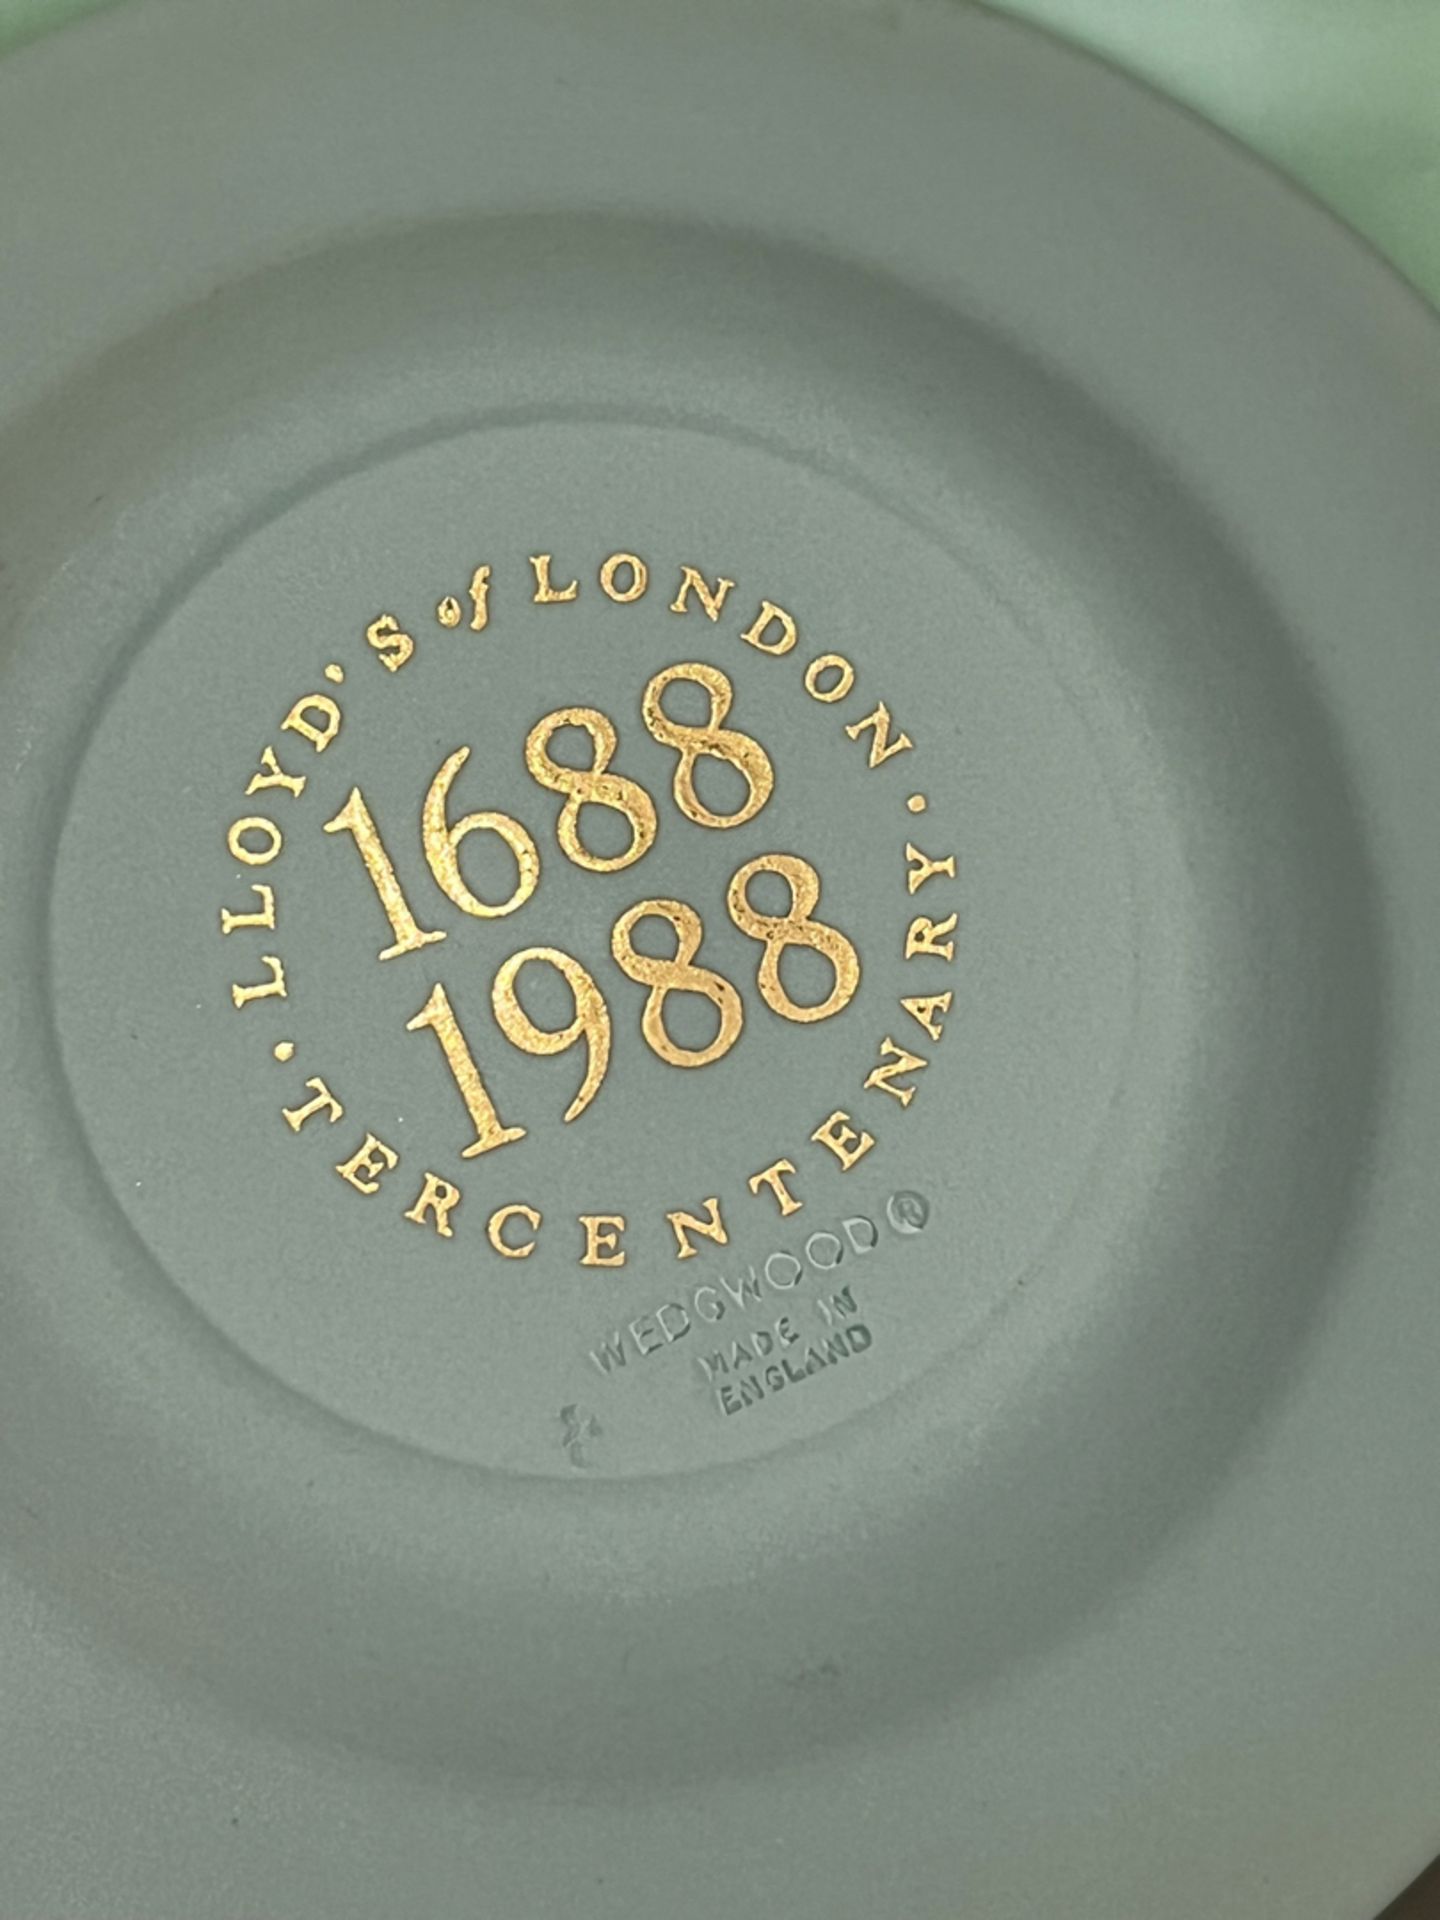 Wedgwood Sea Green Jasper Tray - Lloyd's Of London Tercentenary 1998 Dish - Image 2 of 4